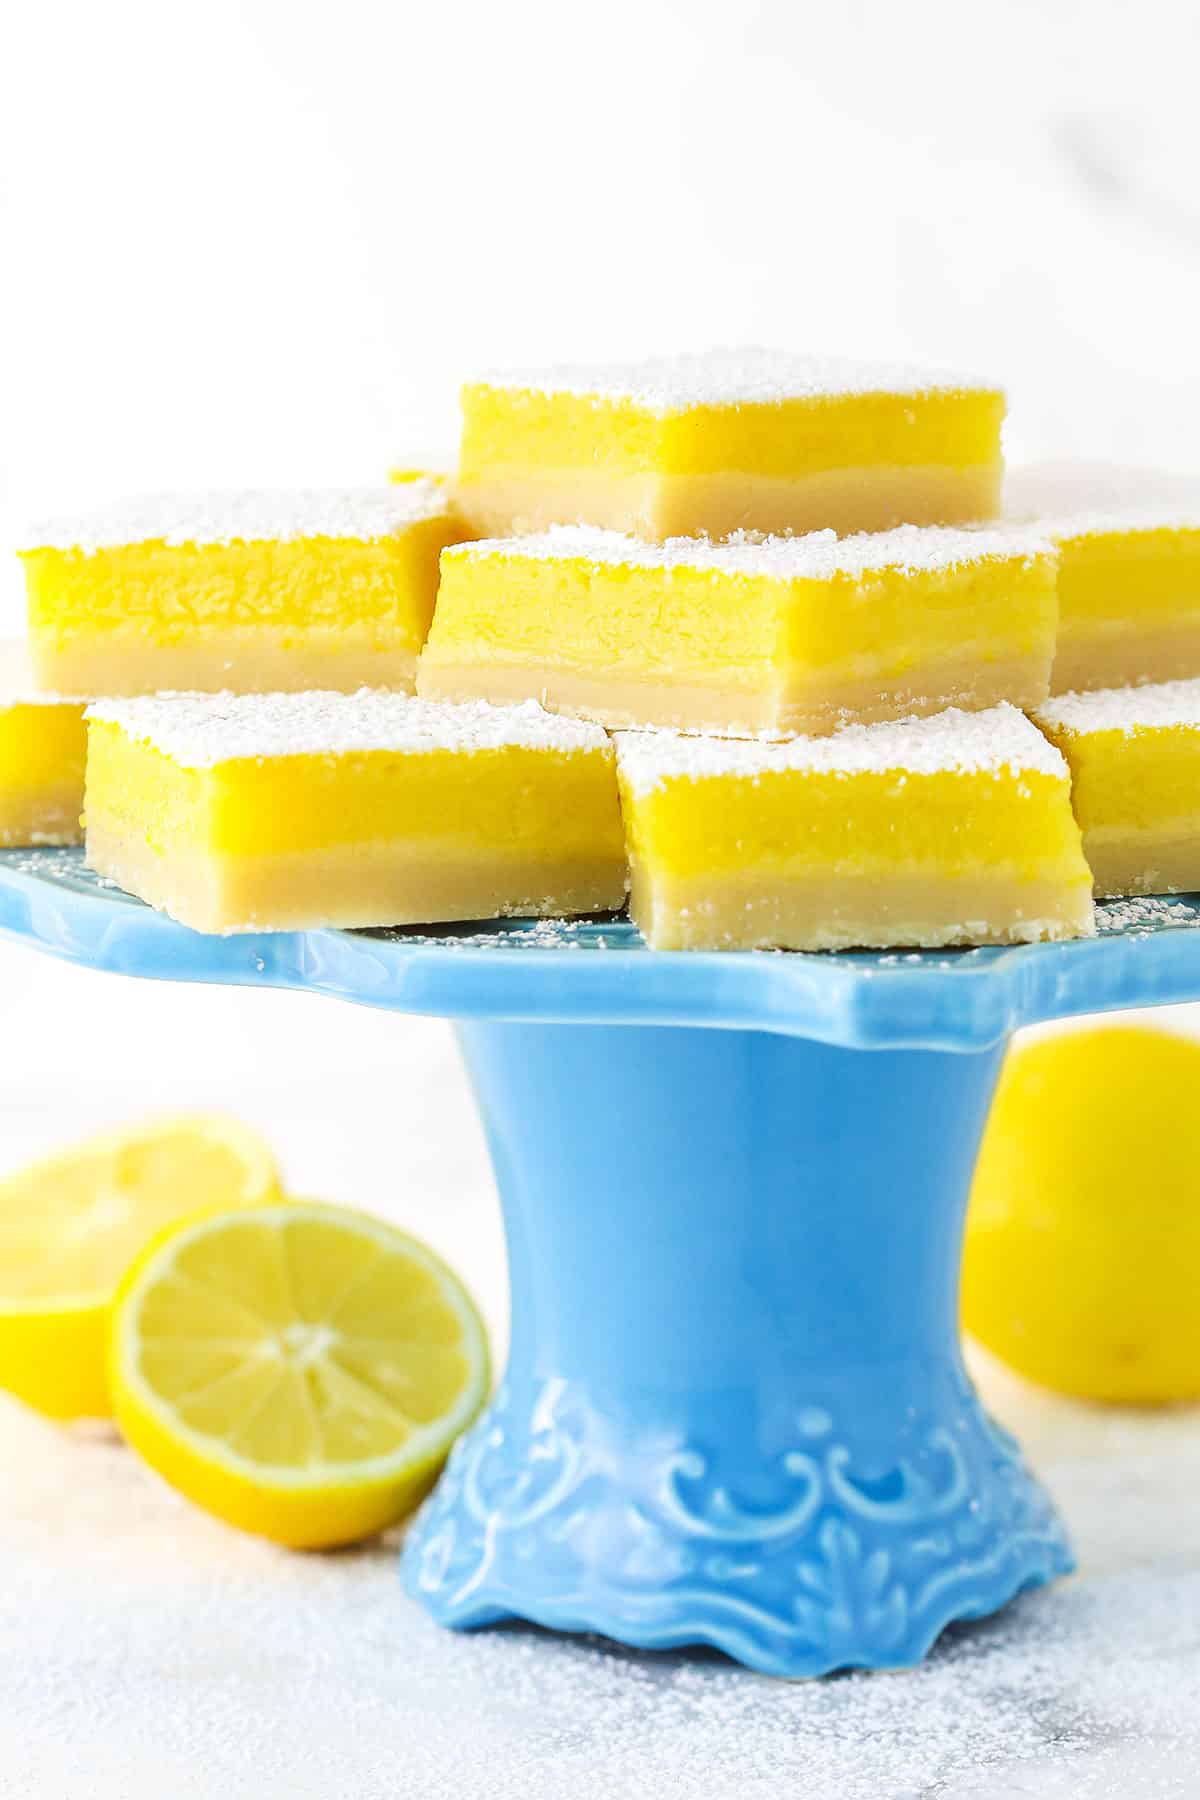 Lemon bars on a blue cake stand surrounded by lemons